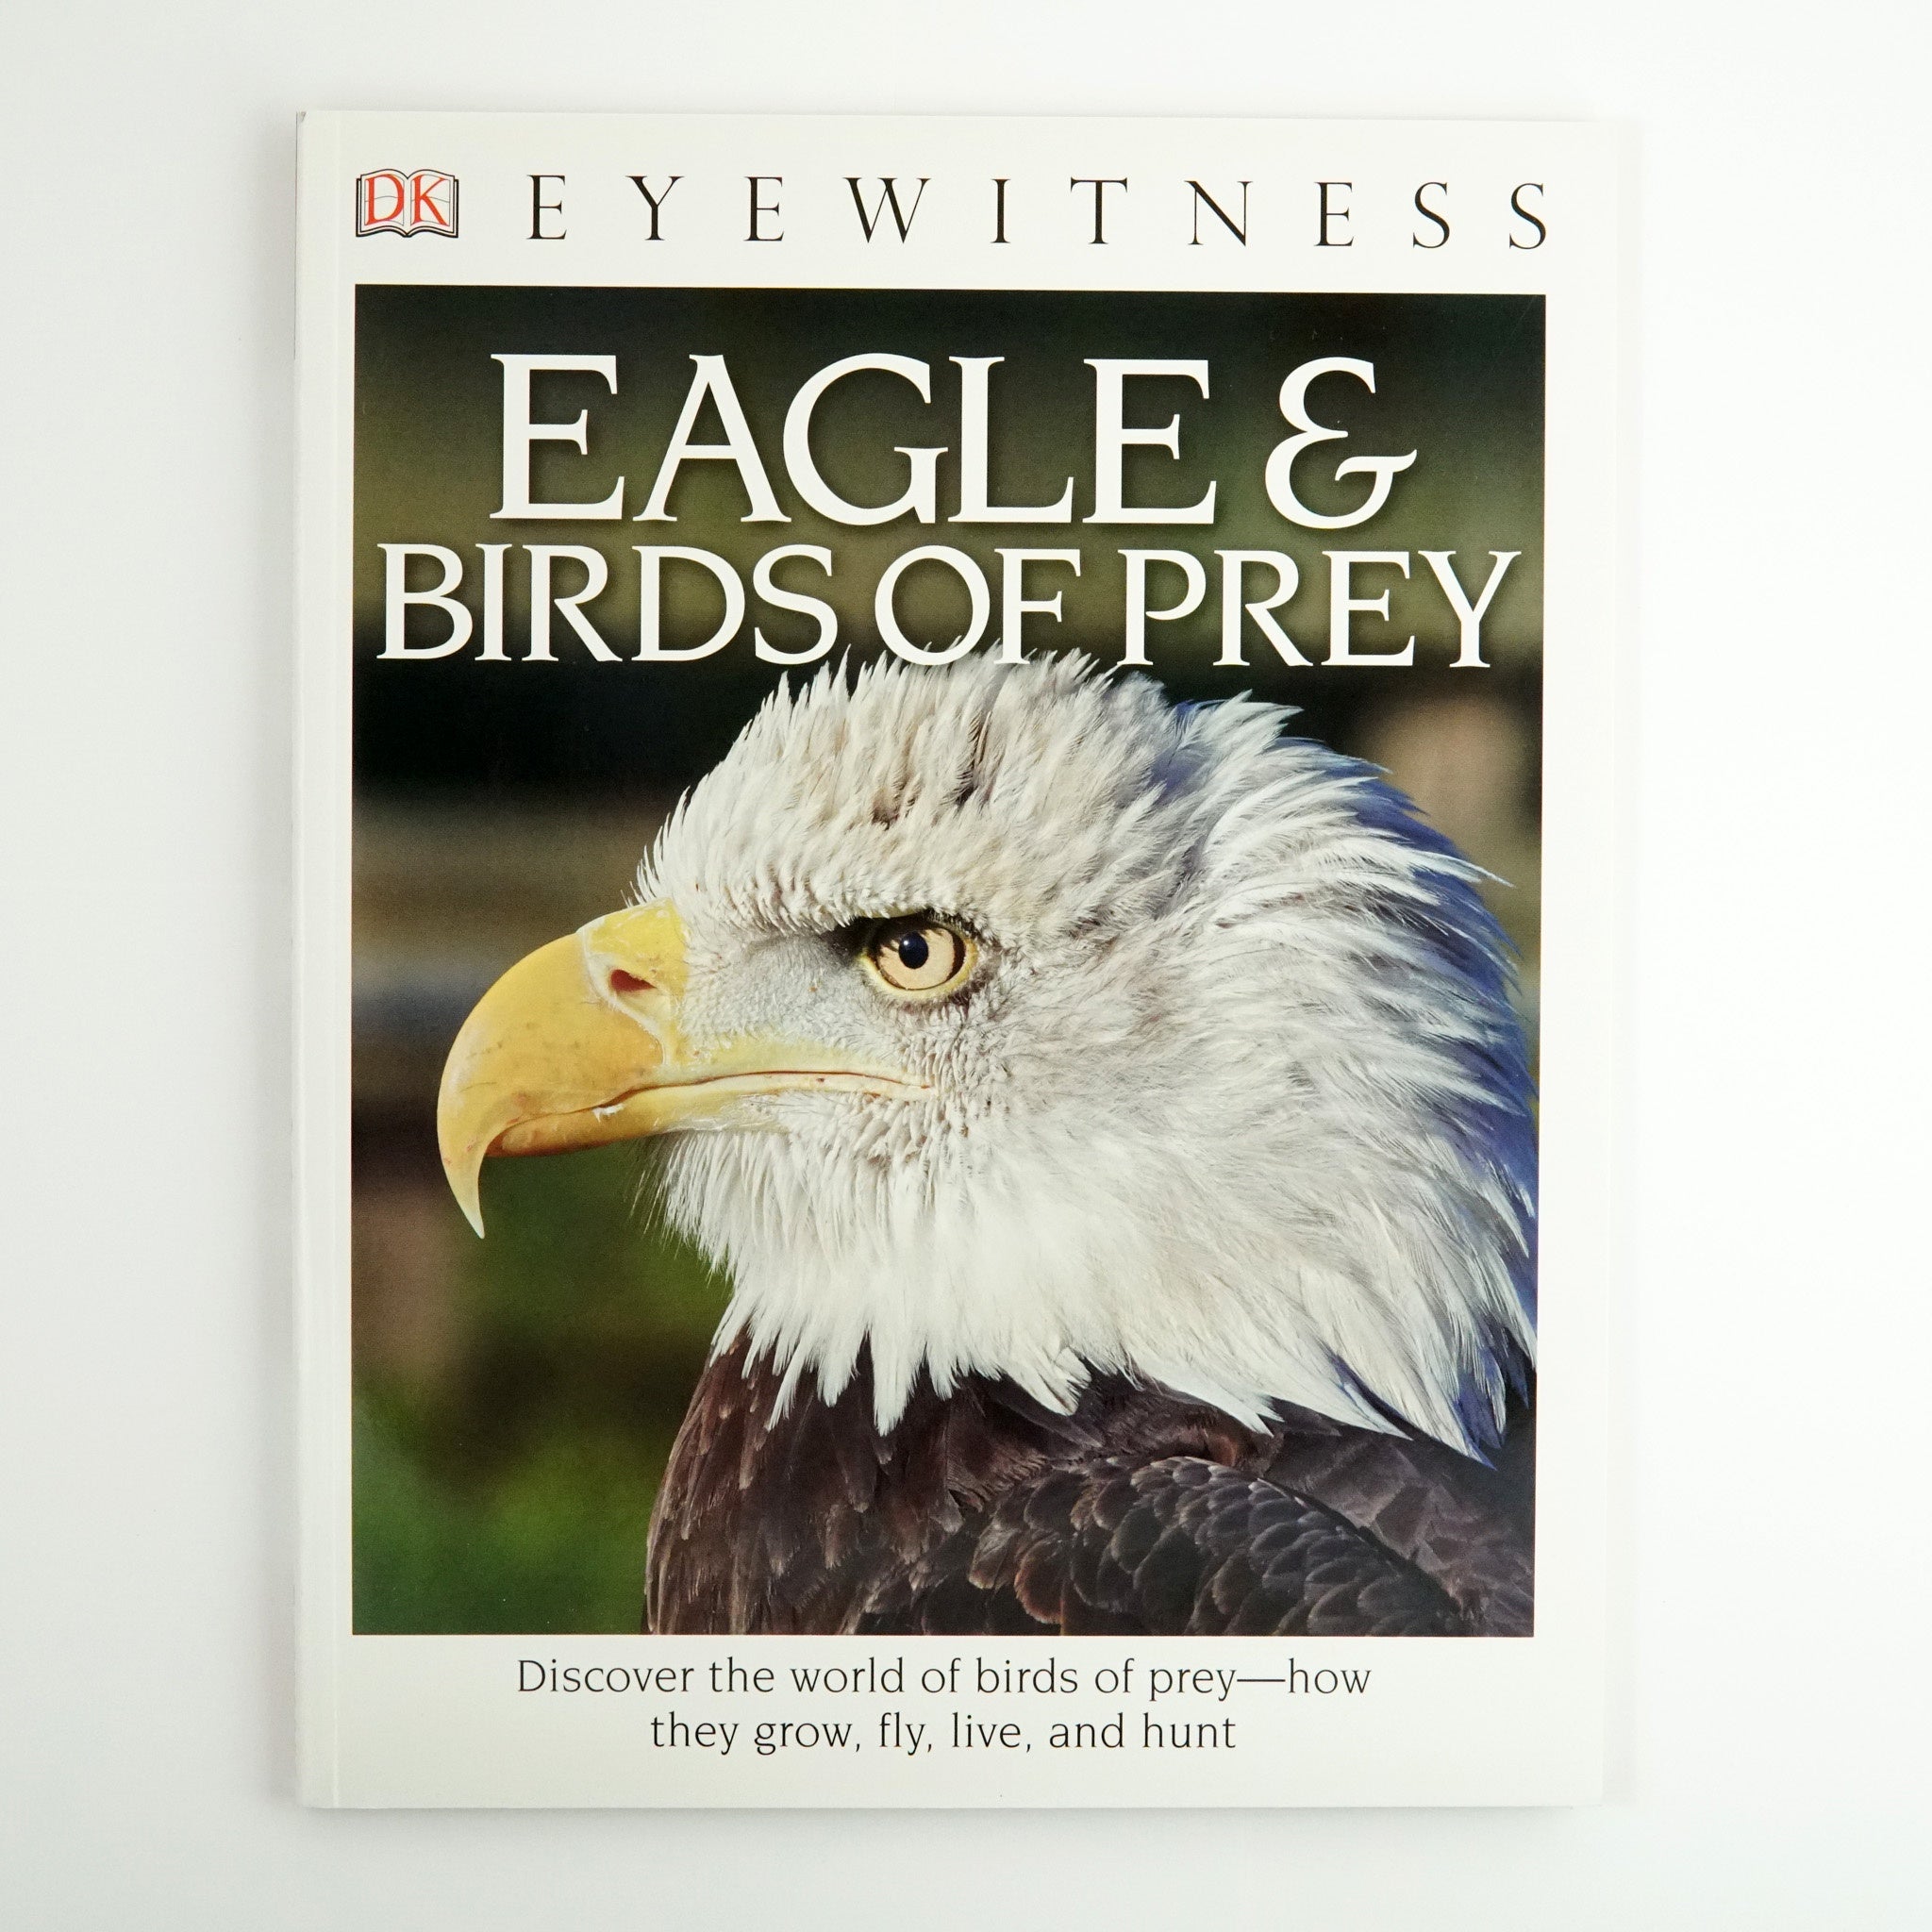 BK 13 DK EYEWITNESS EAGLE &  BIRDS OF PREY BY JEMIMA PARRY-JONES #21044633 D2 MAY23